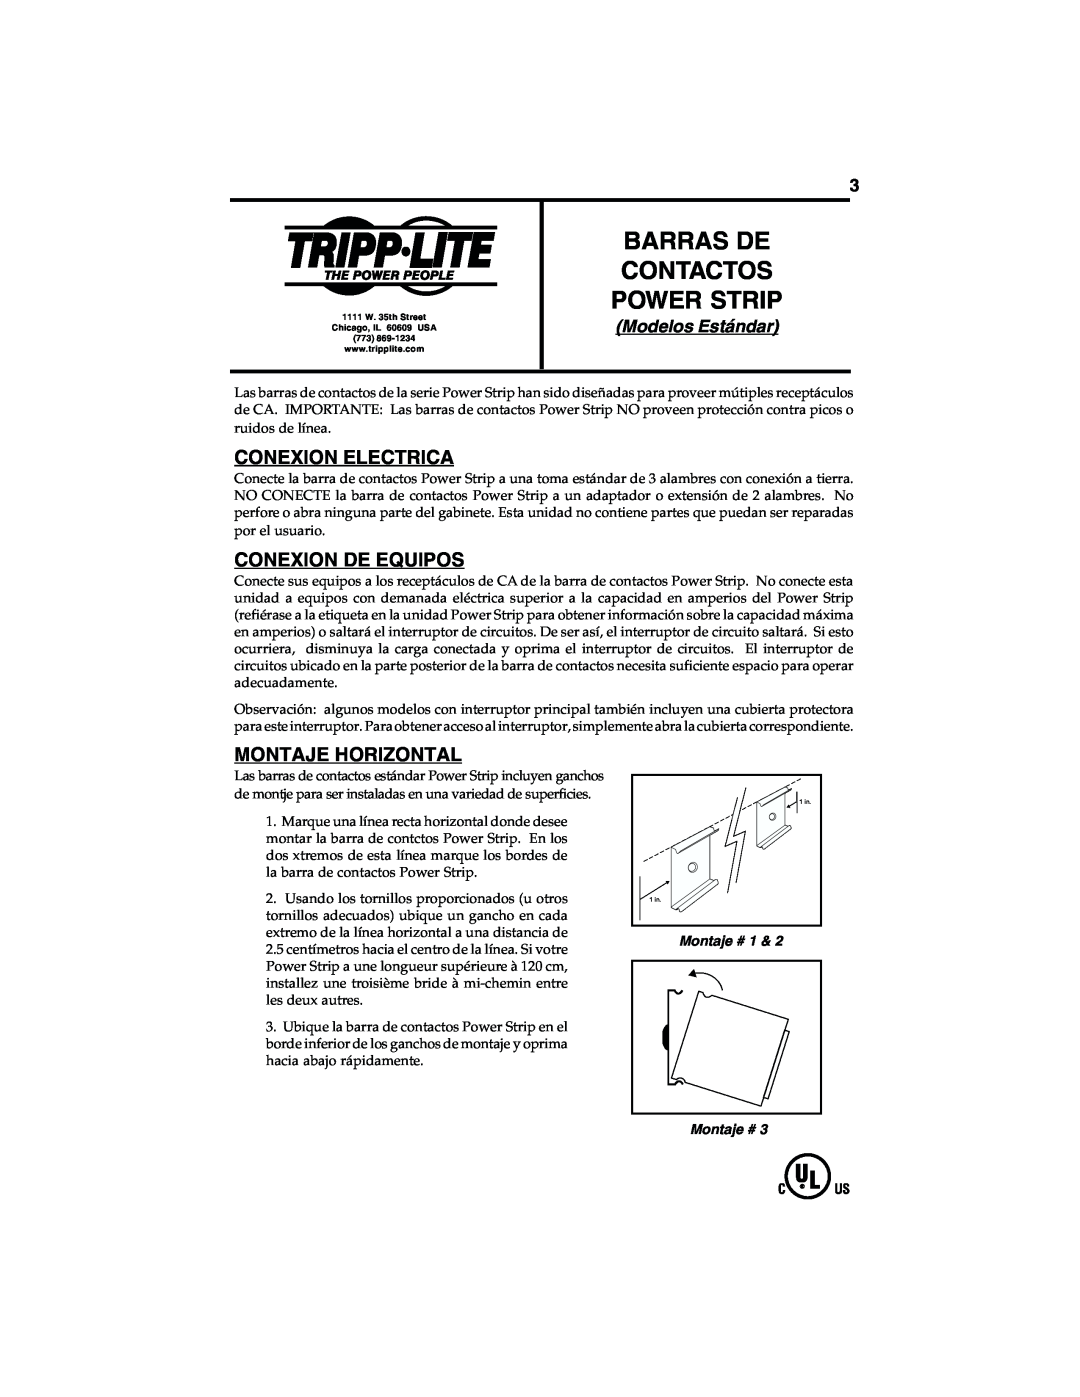 Tripp Lite 93-1990 (200108029) Barras De Contactos Power Strip, Modelos Estándar, Montaje # 1, Conexion Electrica 